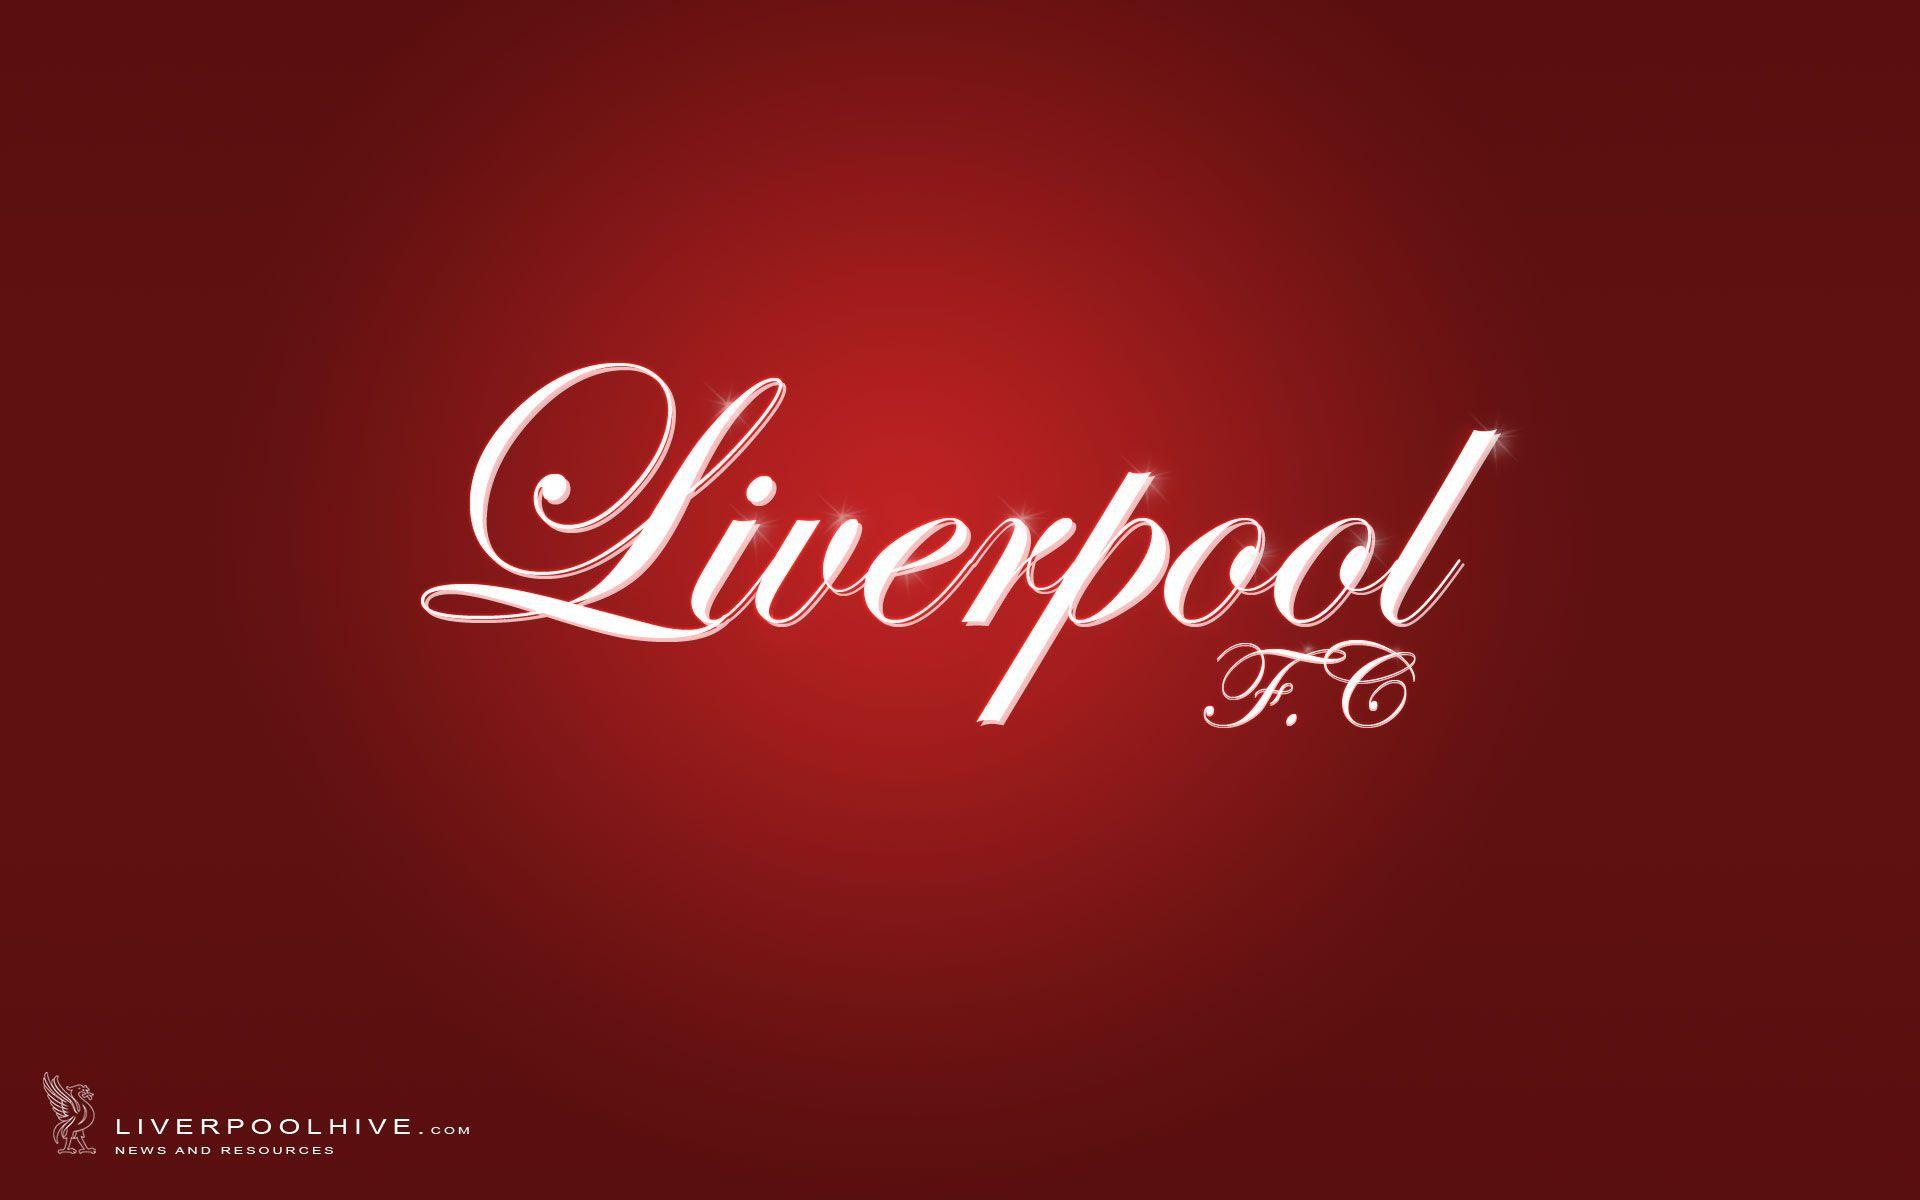 Wallpapers Logo Liverpool 2016